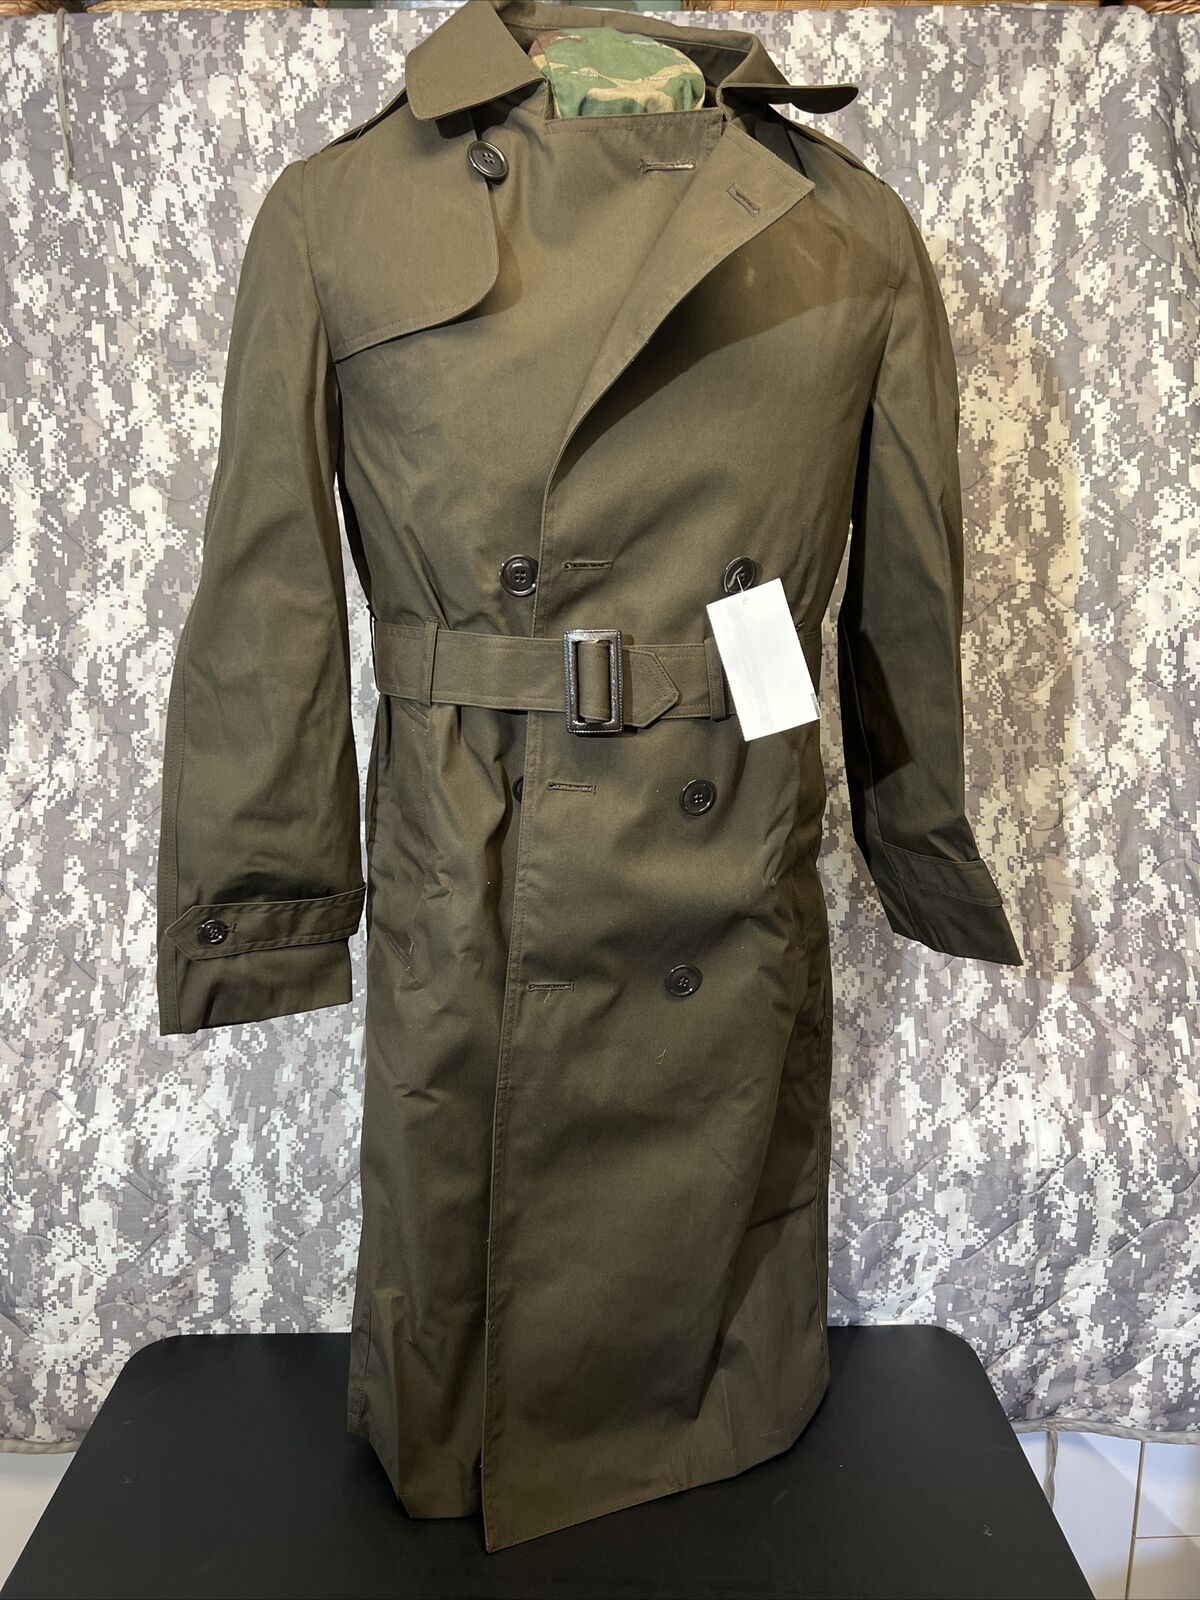 Men’s Coat All Weather Army Green Service Uniform AGSU Trench Coat 42 XL  K-142